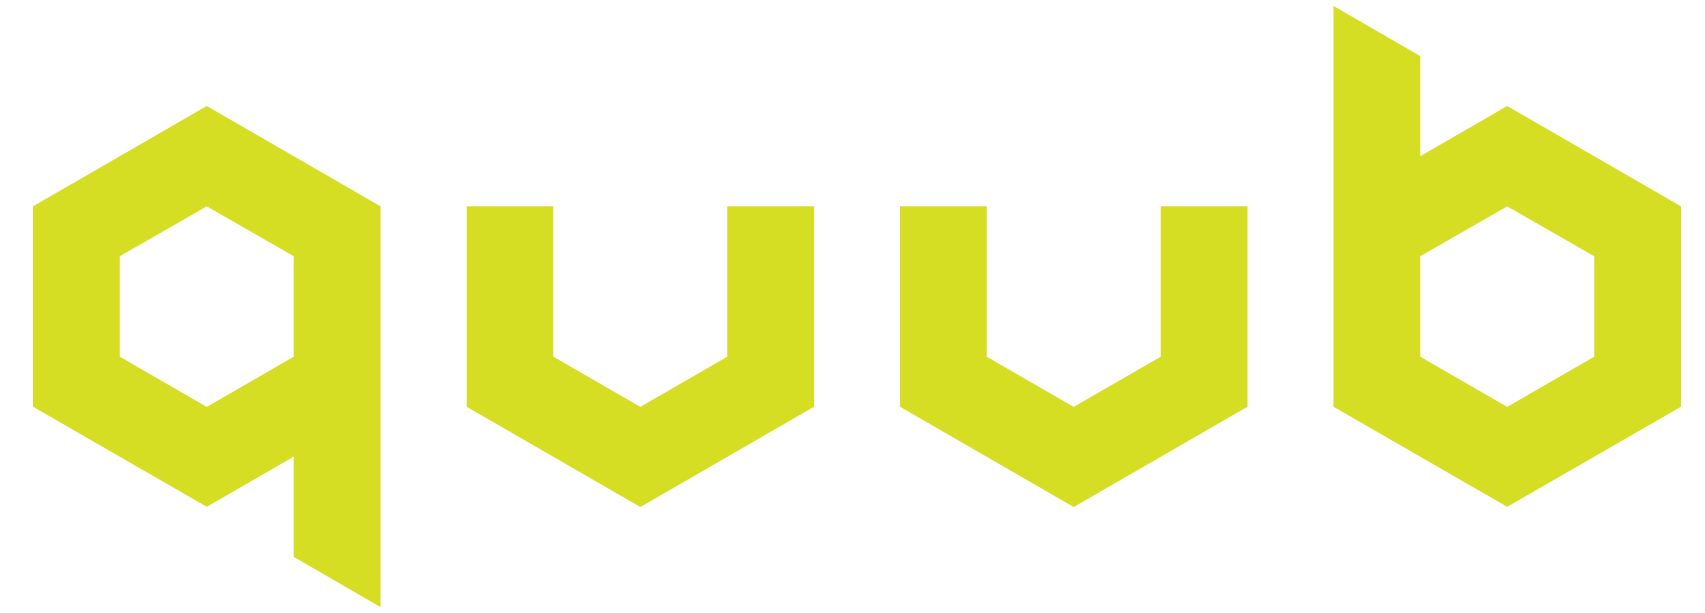 Quub (Mini-Cubes) logo